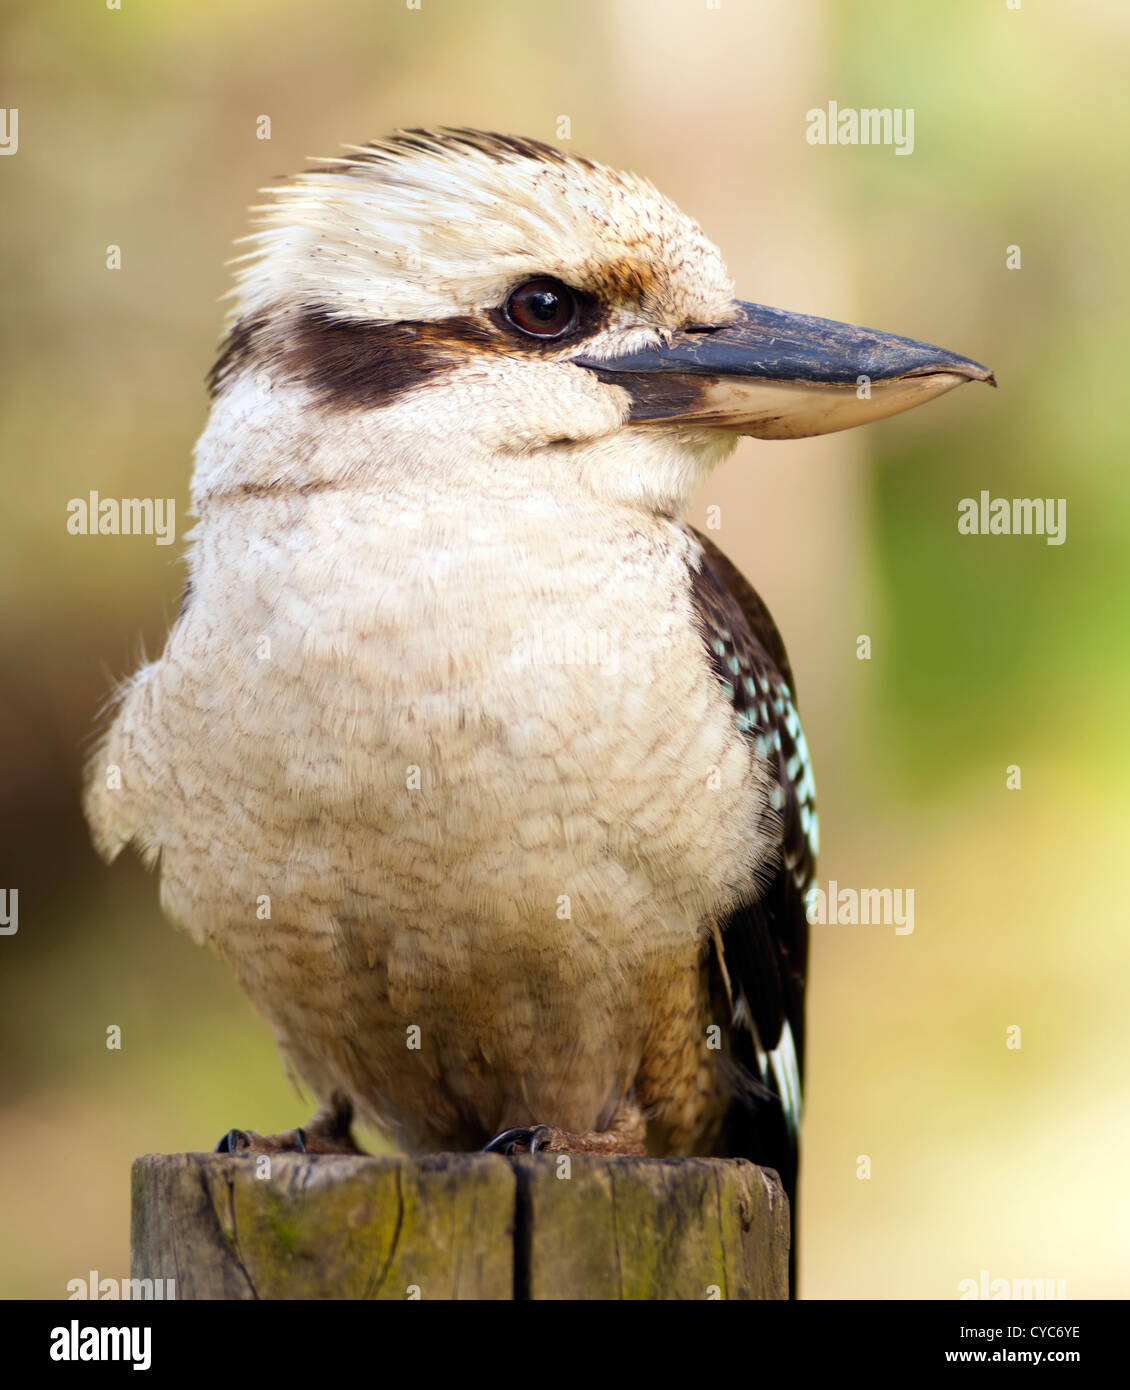 Kookaburra, native Australian bird in the wild close up Stock Photo